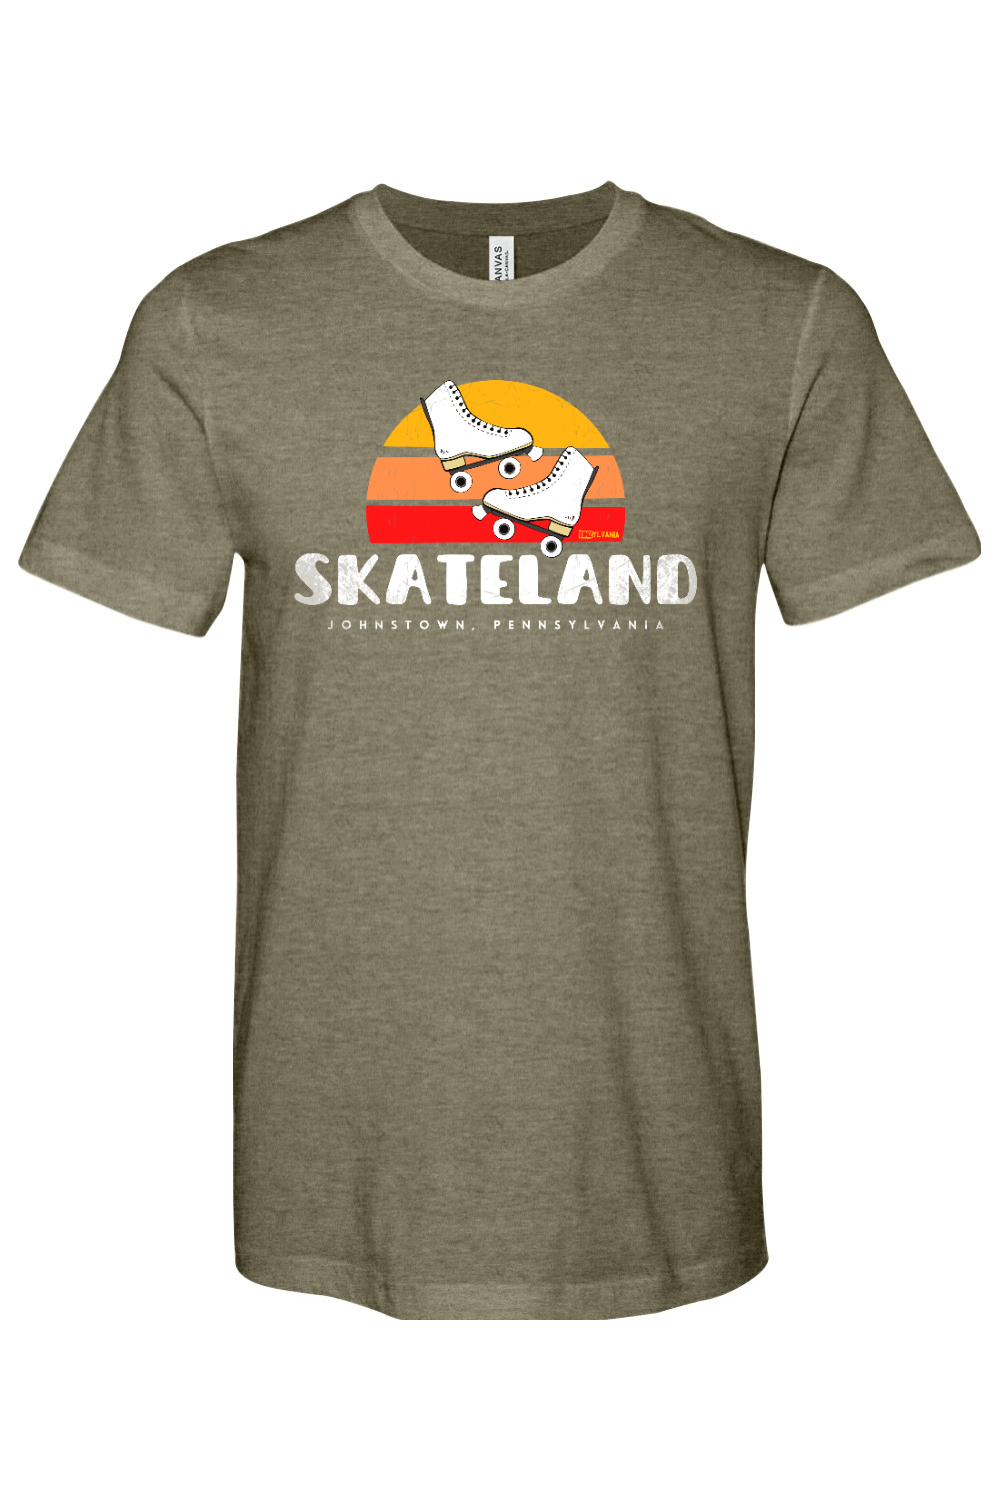 Skateland Roller Rink - Johnstown, PA - Yinzylvania